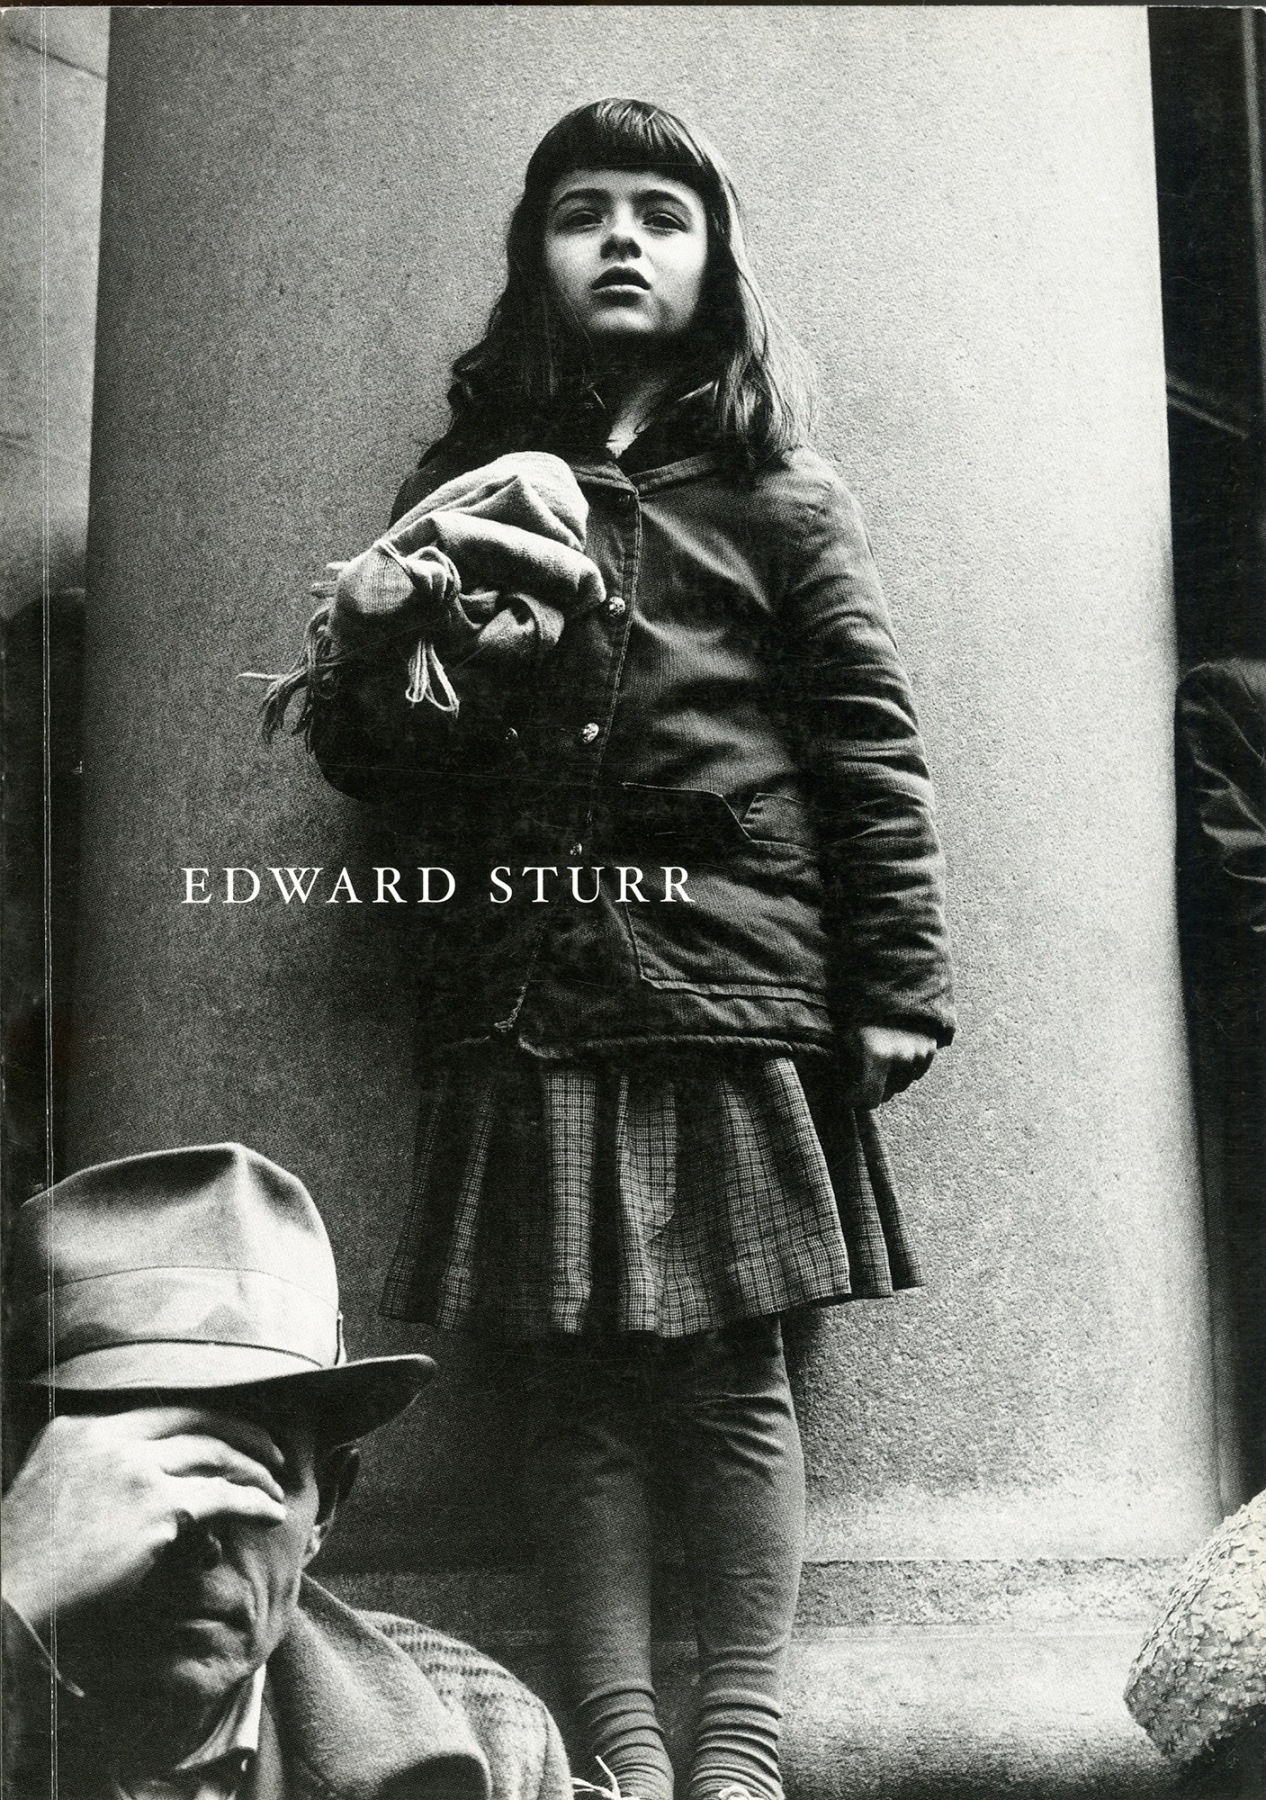 Edward Sturr